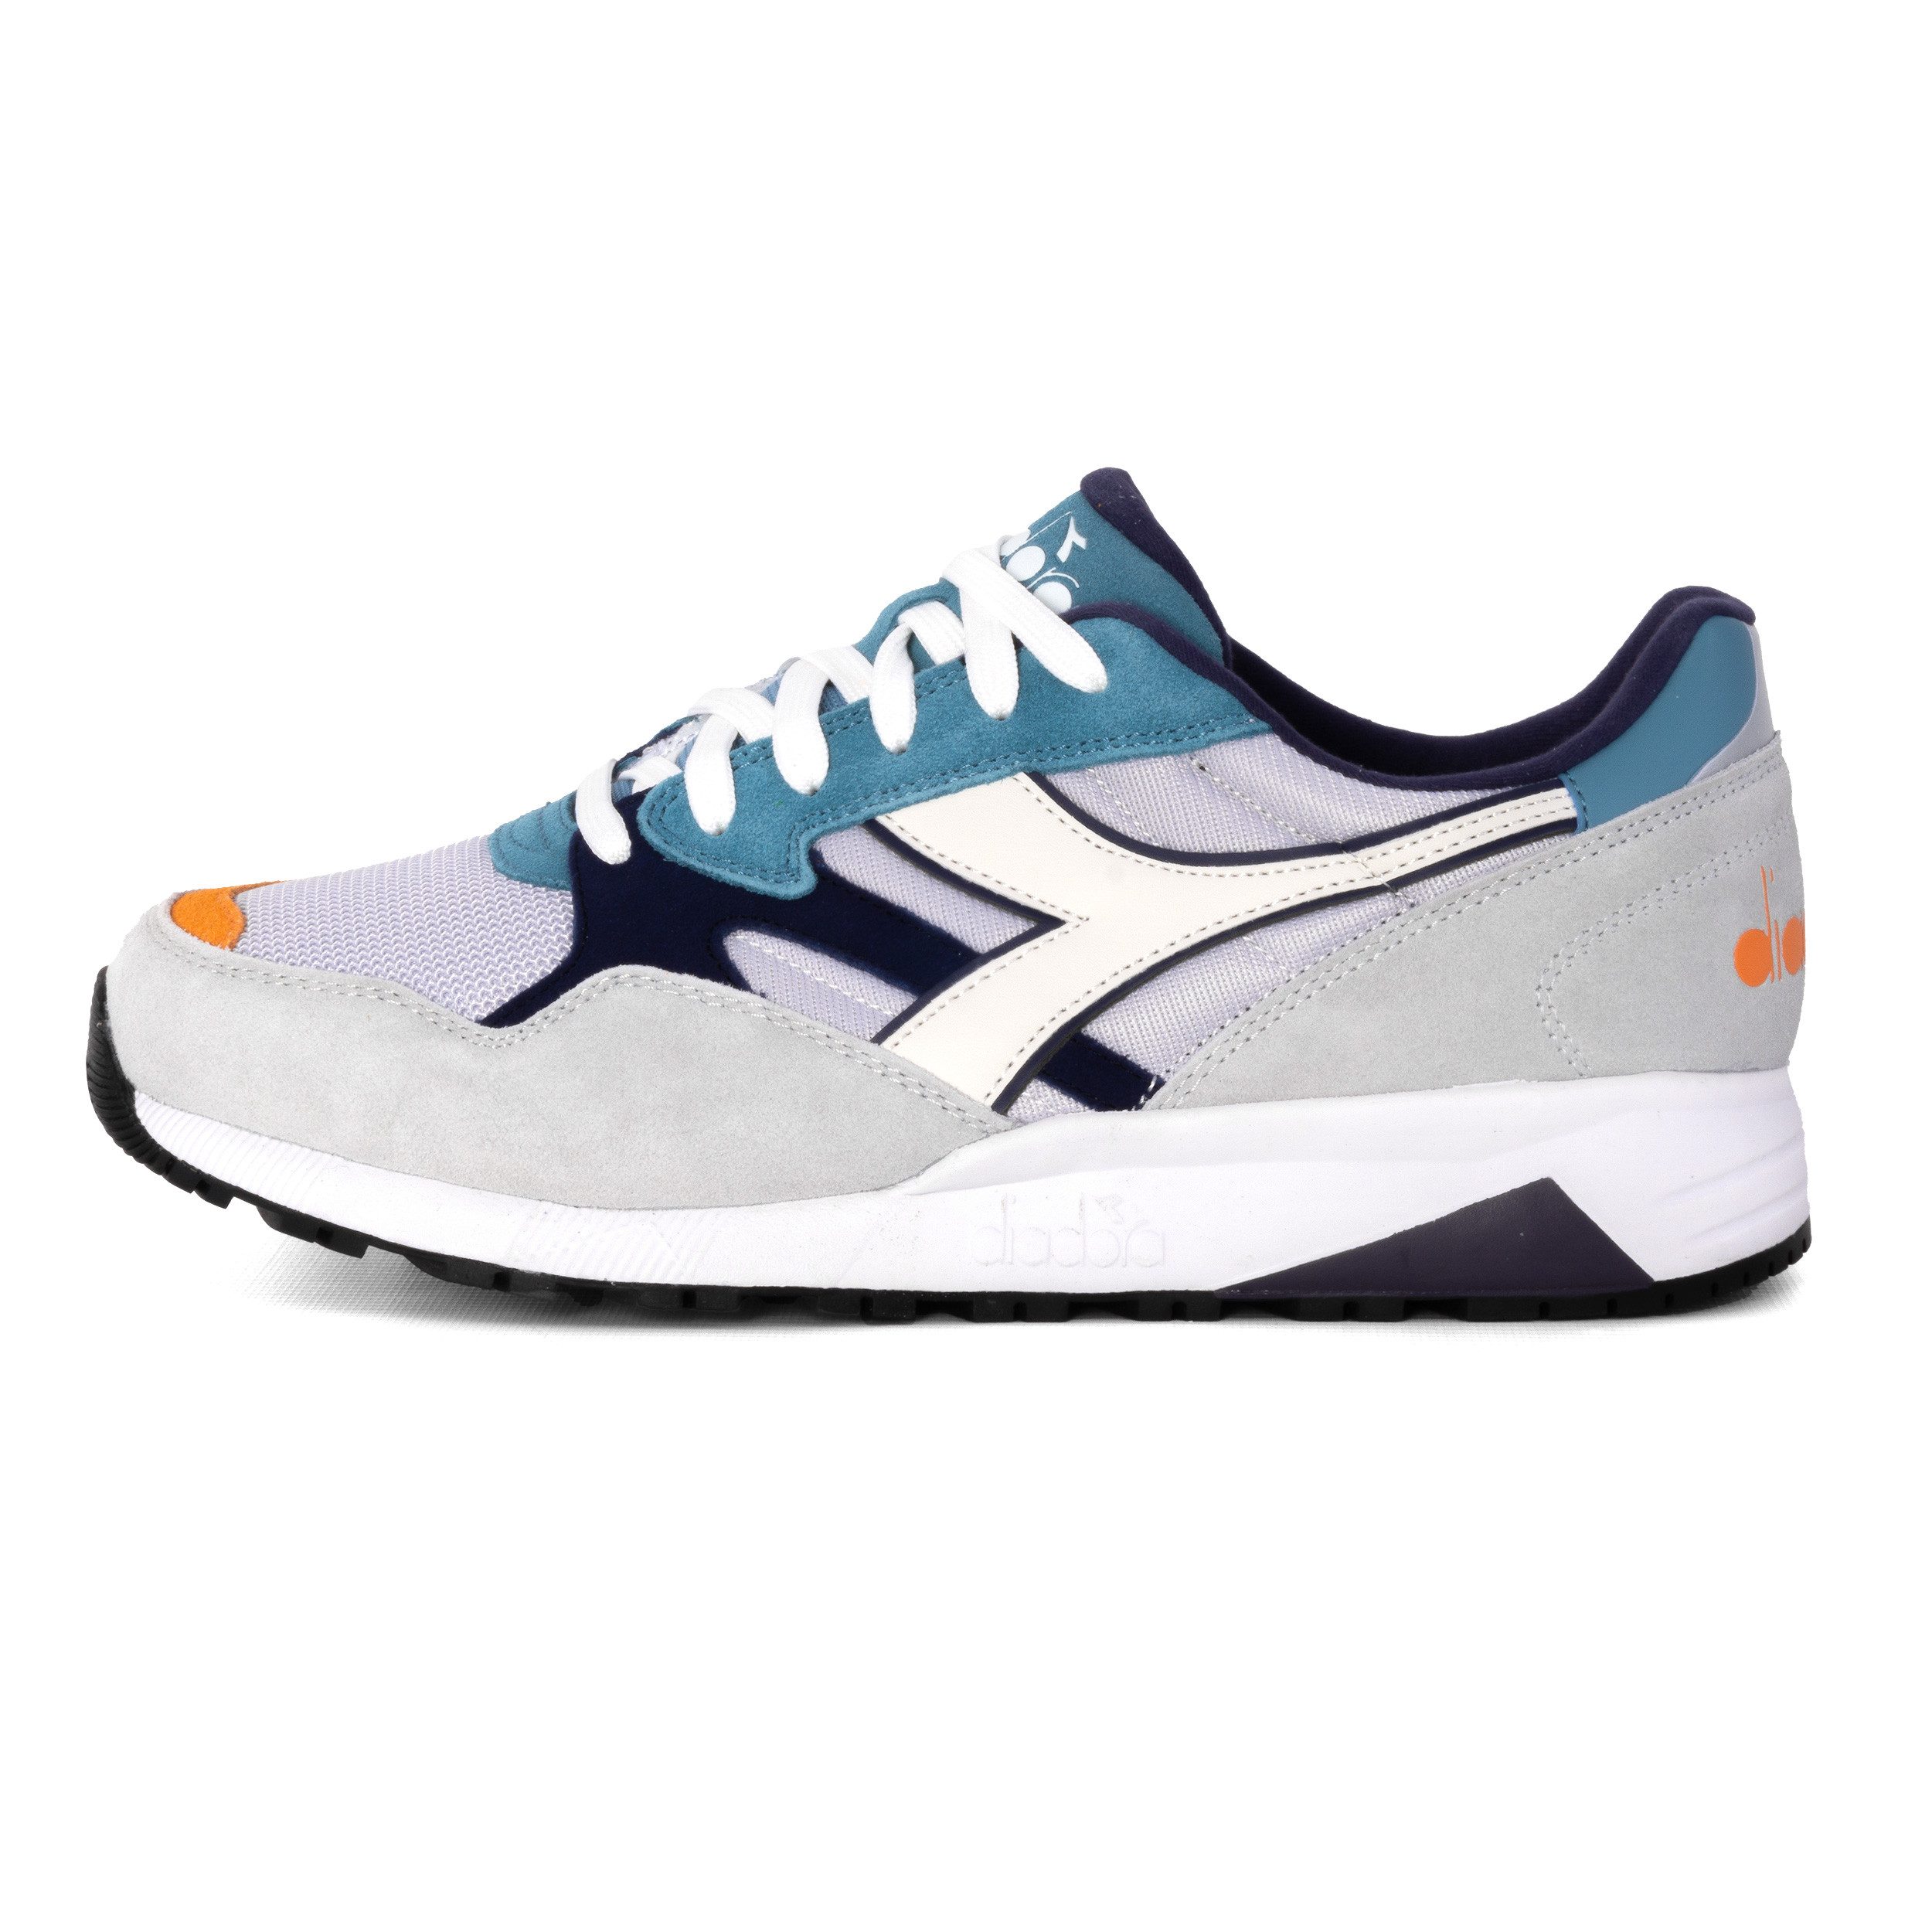 Diadora Schuhe diadora N 902, G 43, F grey/ blue Sneaker